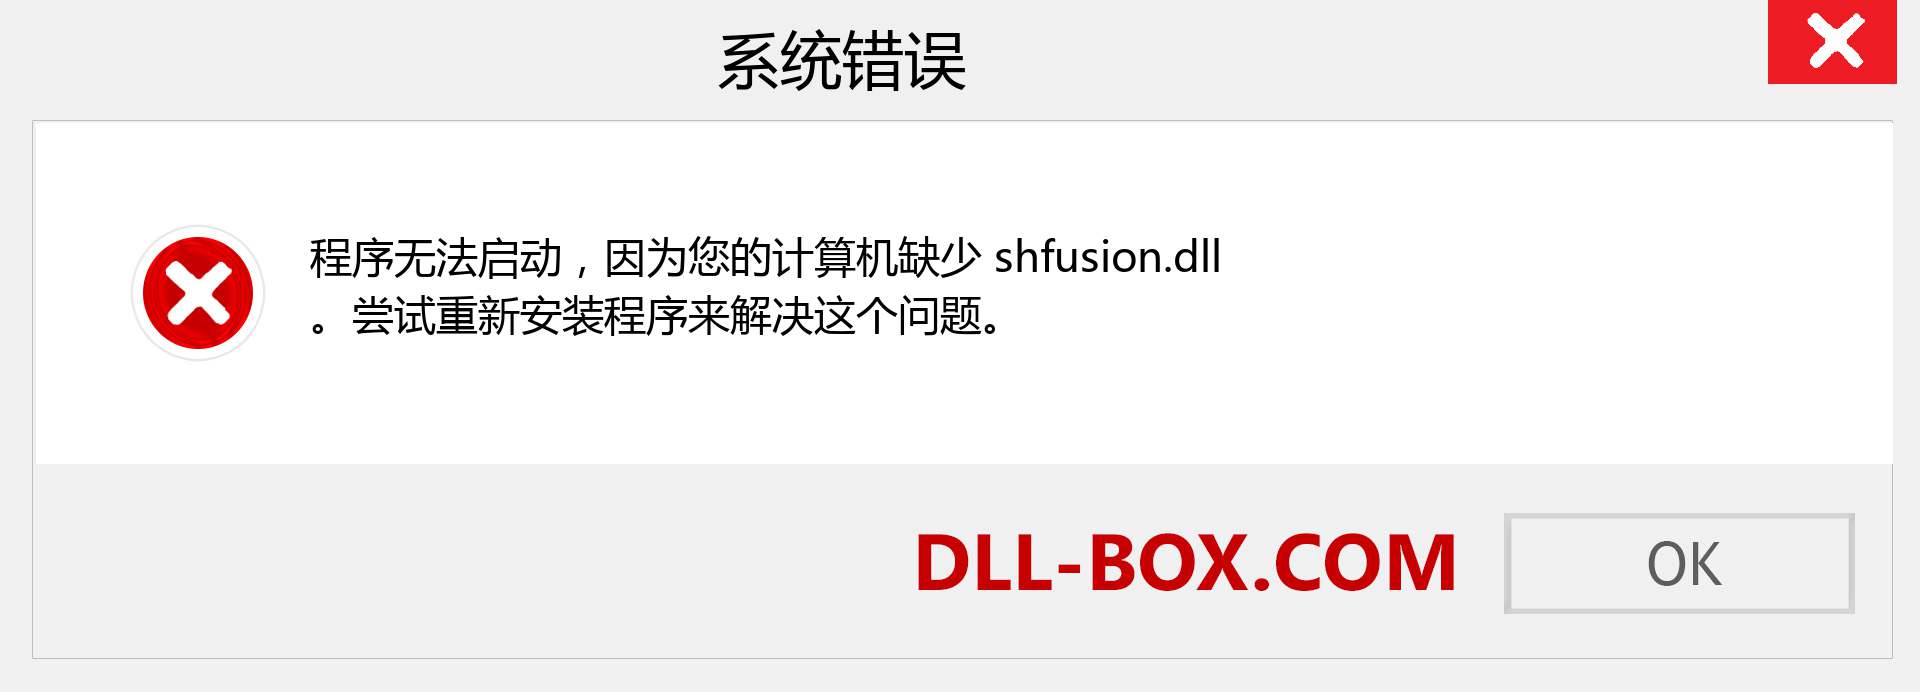 shfusion.dll 文件丢失？。 适用于 Windows 7、8、10 的下载 - 修复 Windows、照片、图像上的 shfusion dll 丢失错误